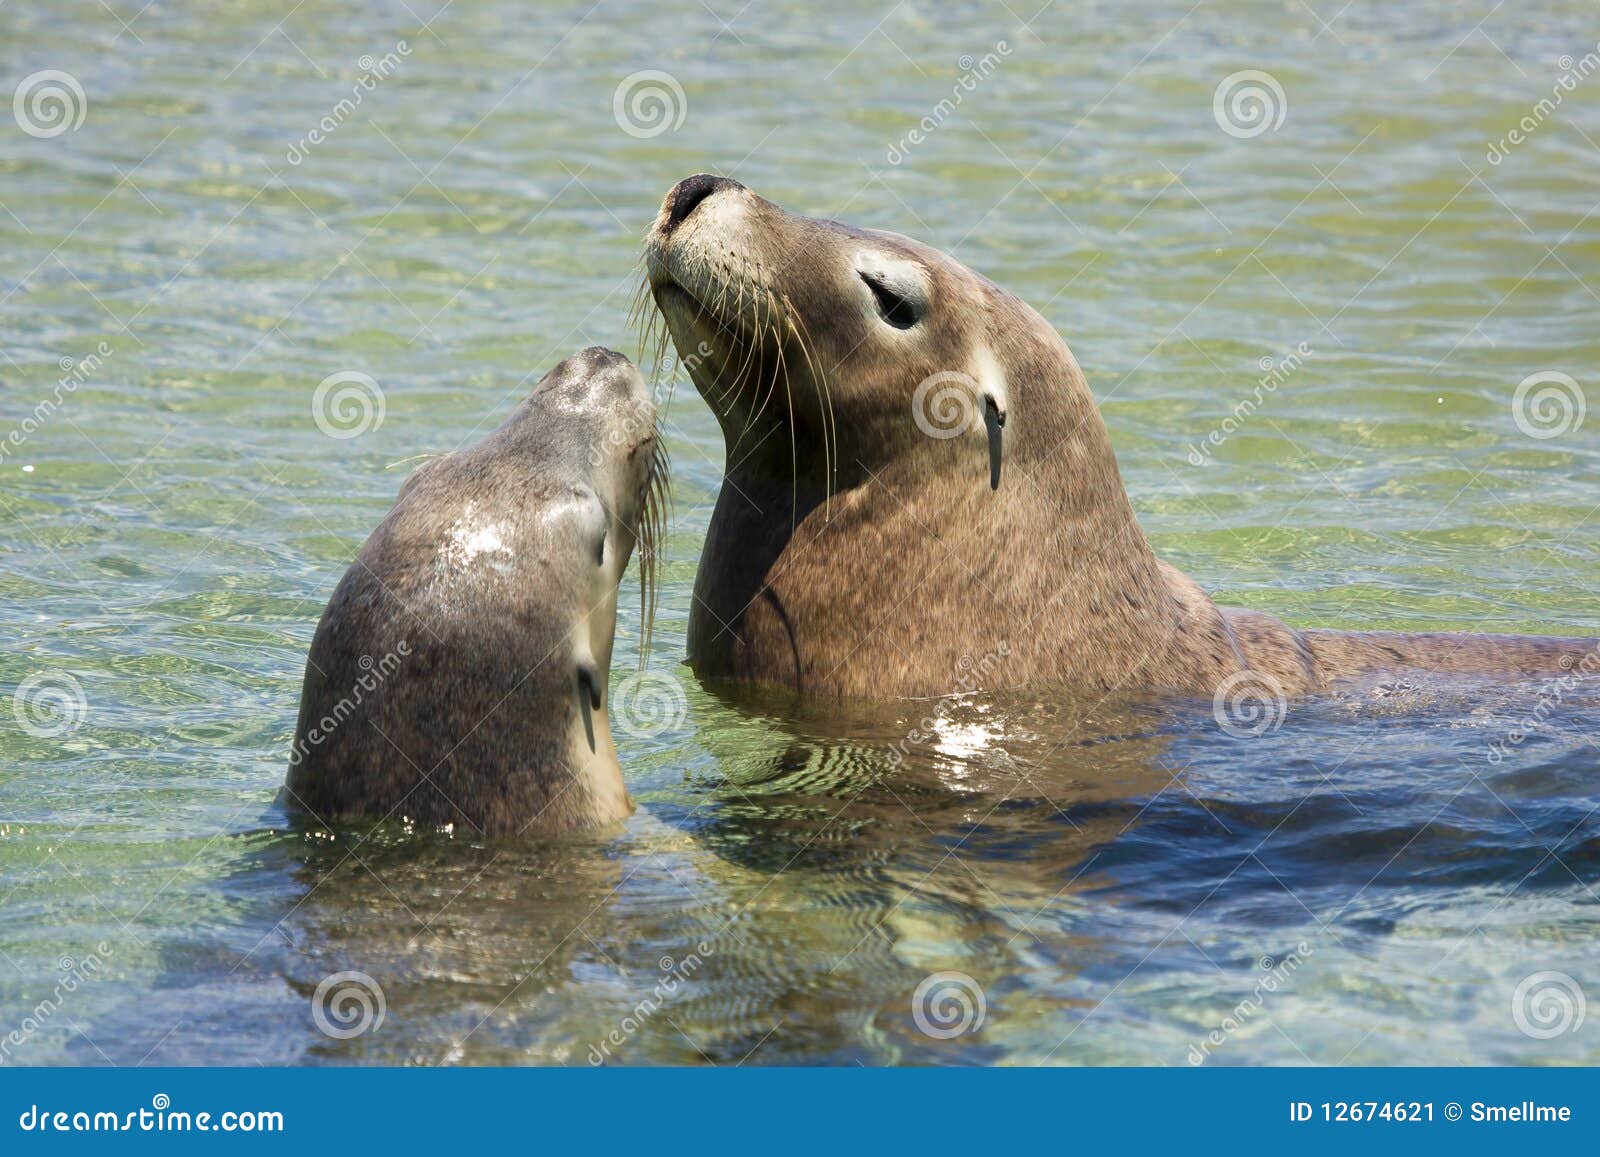 seals playing